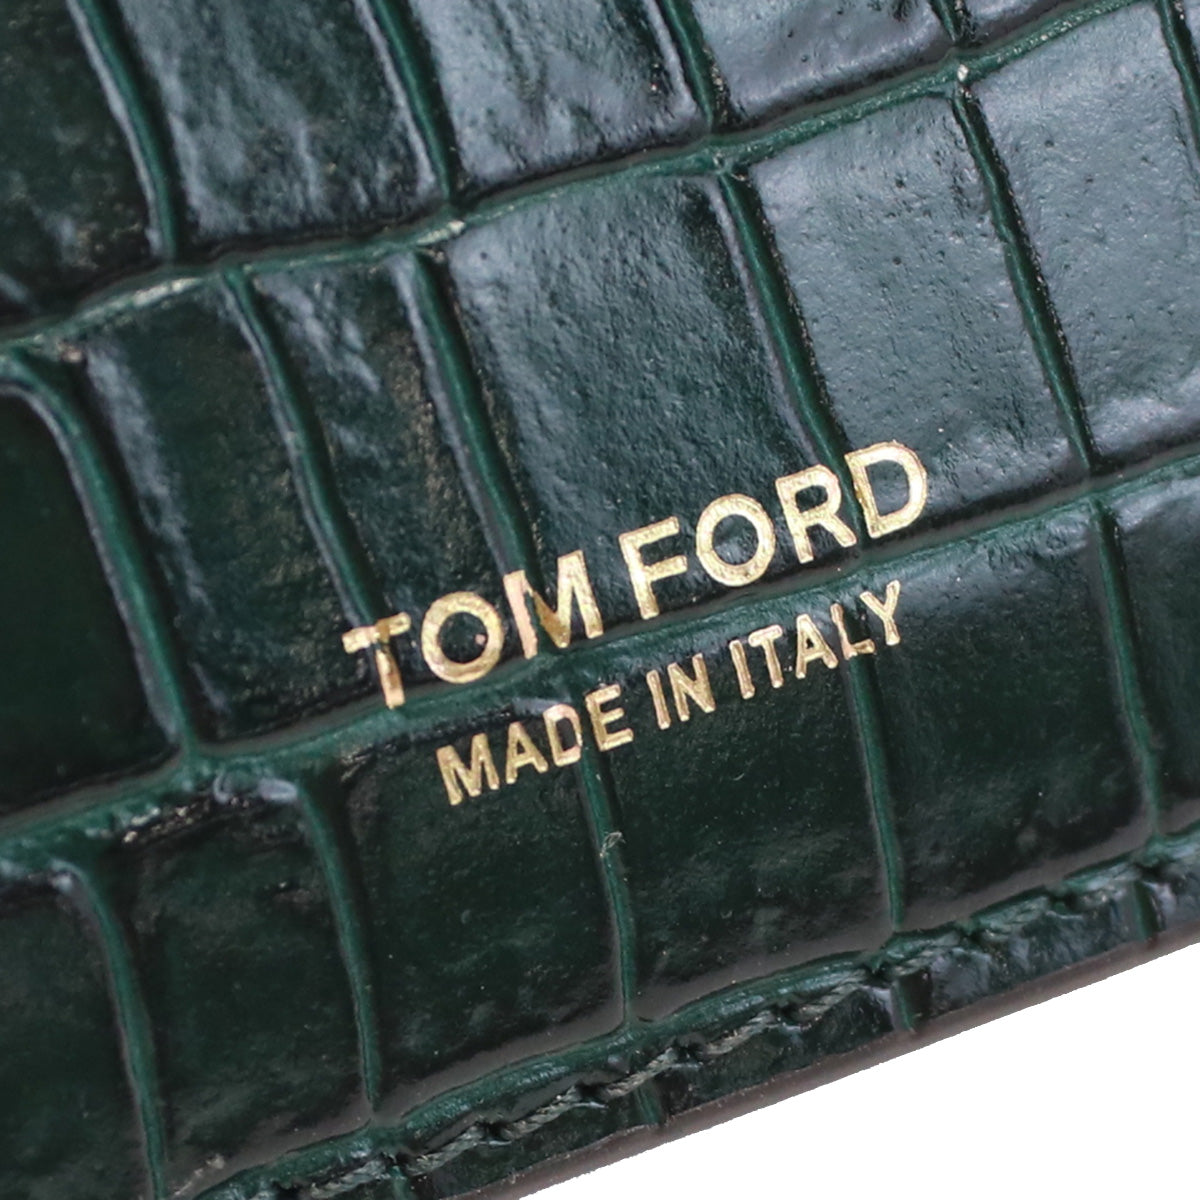 TOM FORD トムフォード Y0279T カードケース グリーン系 メンズ